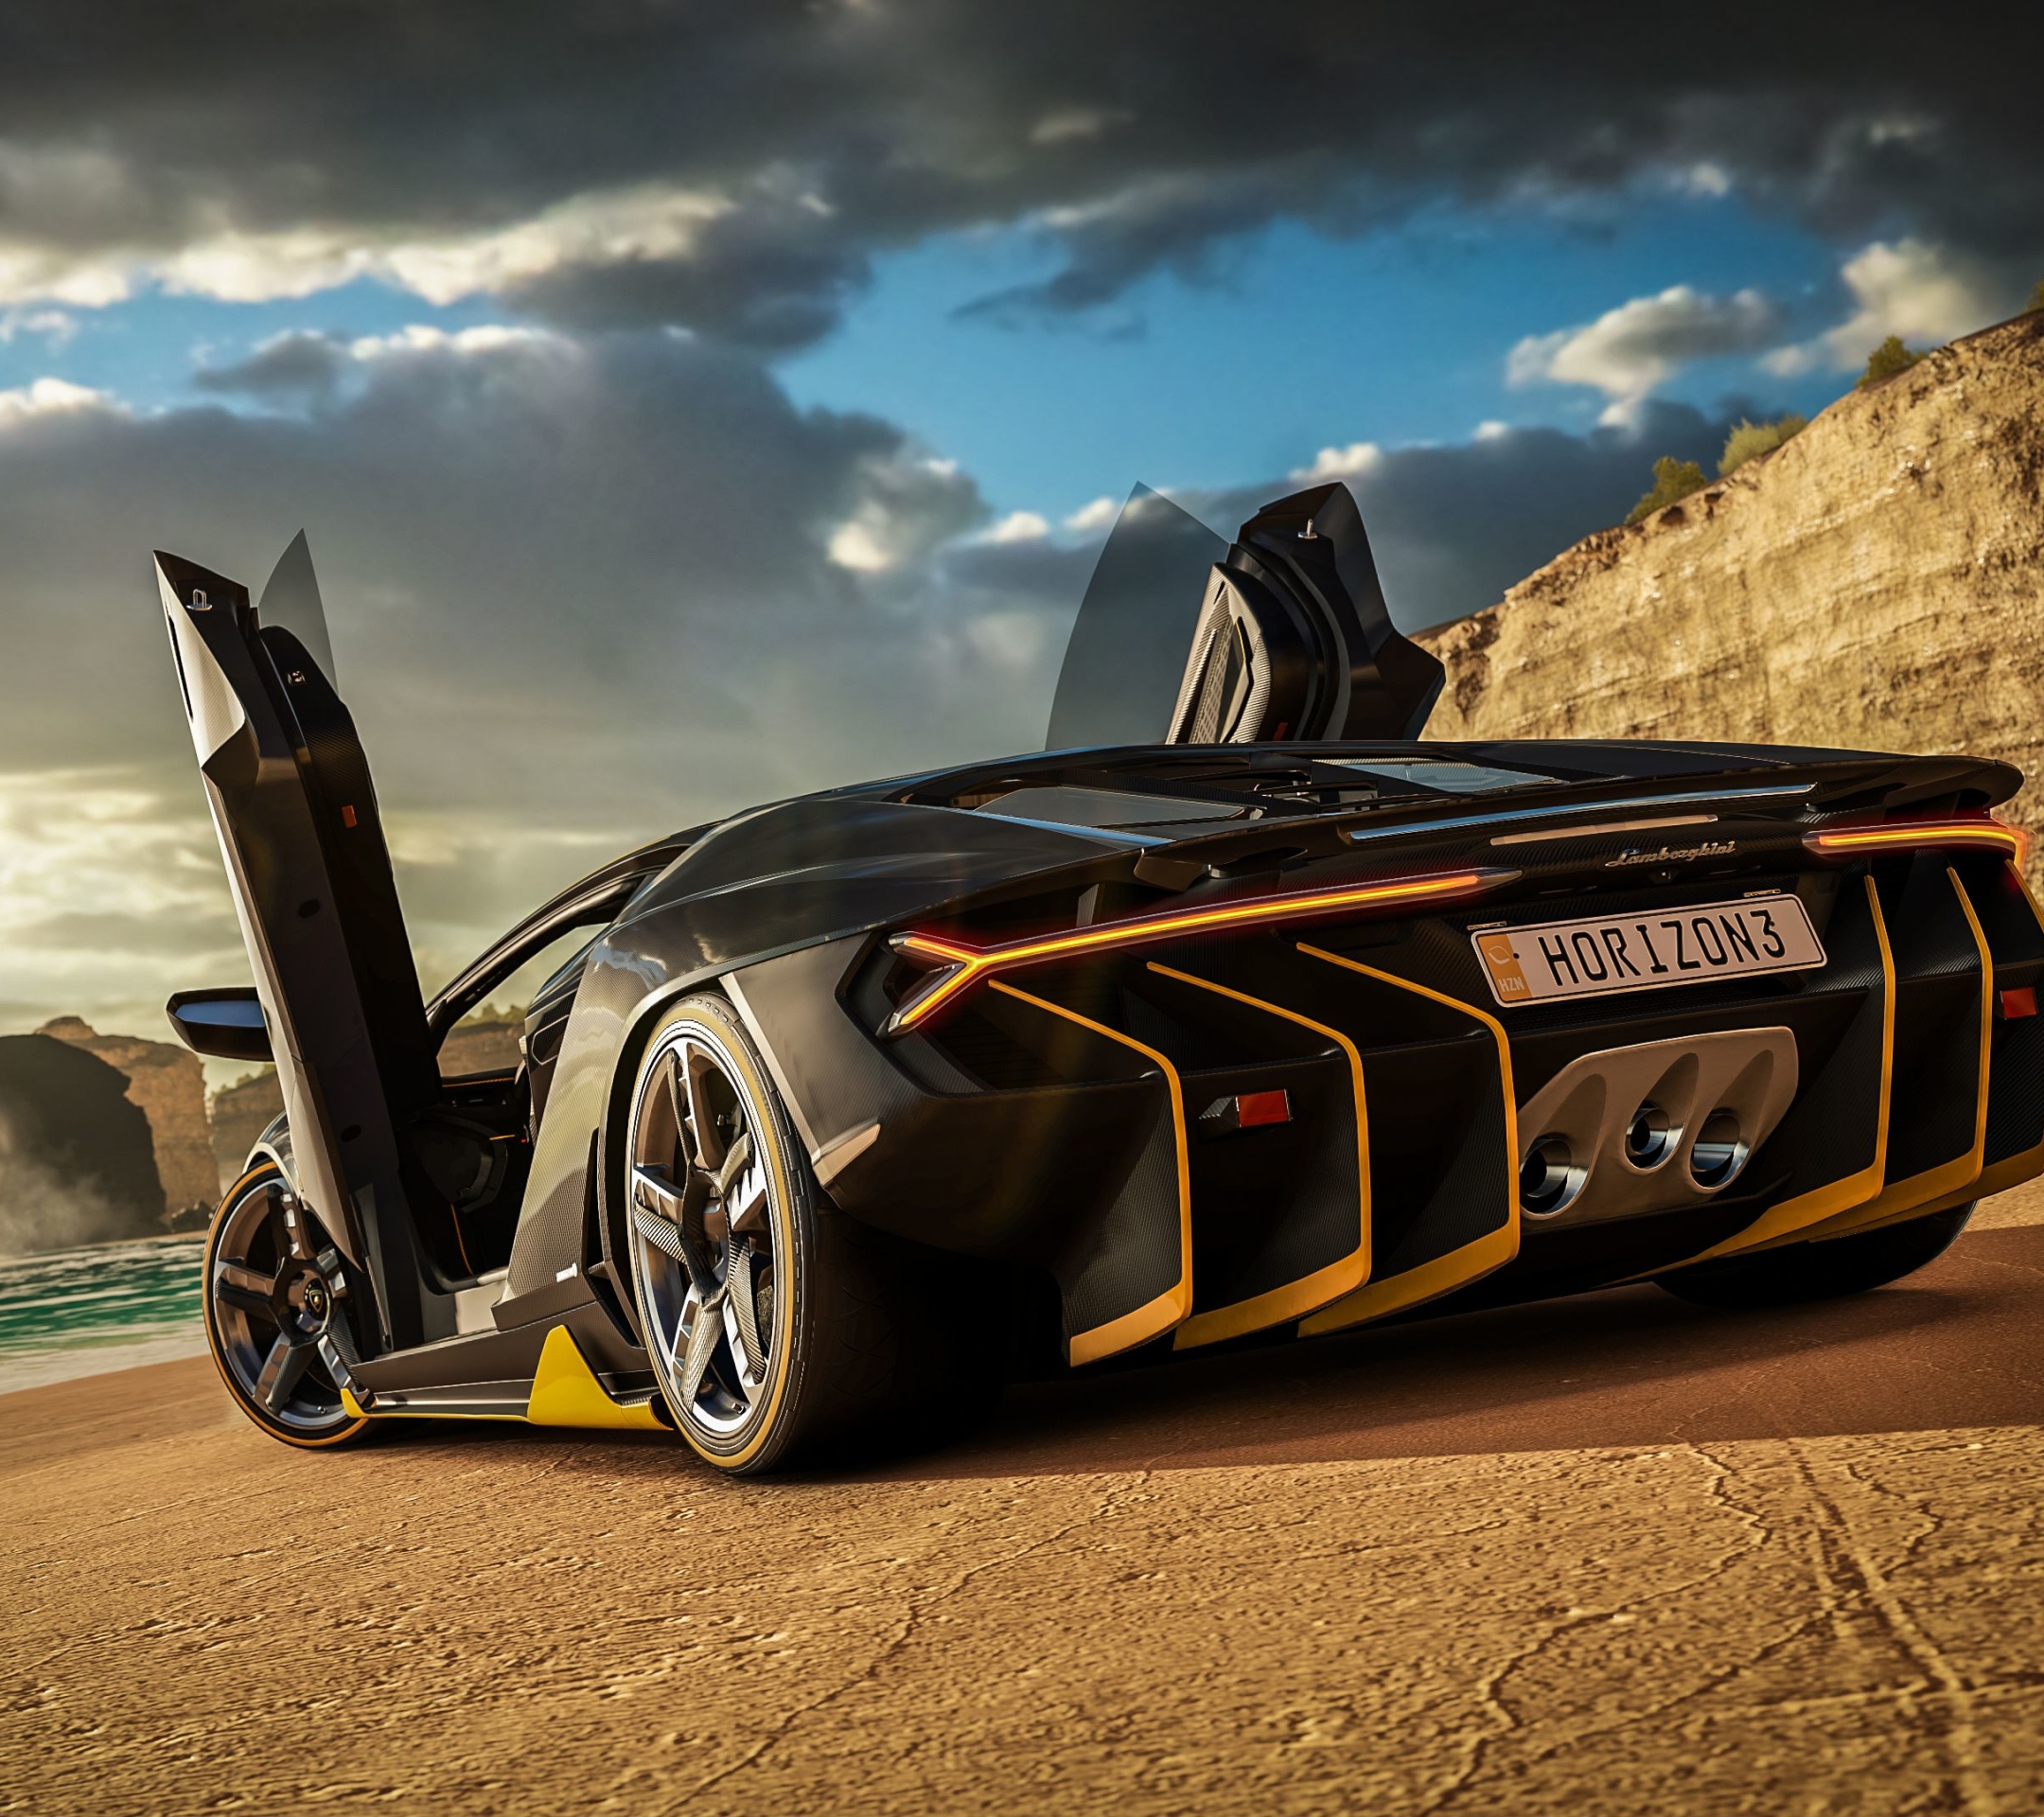 Descarga gratis la imagen Lamborghini, Fuerza, Lamborghini Centenario, Videojuego, Forza Horizon 3 en el escritorio de tu PC